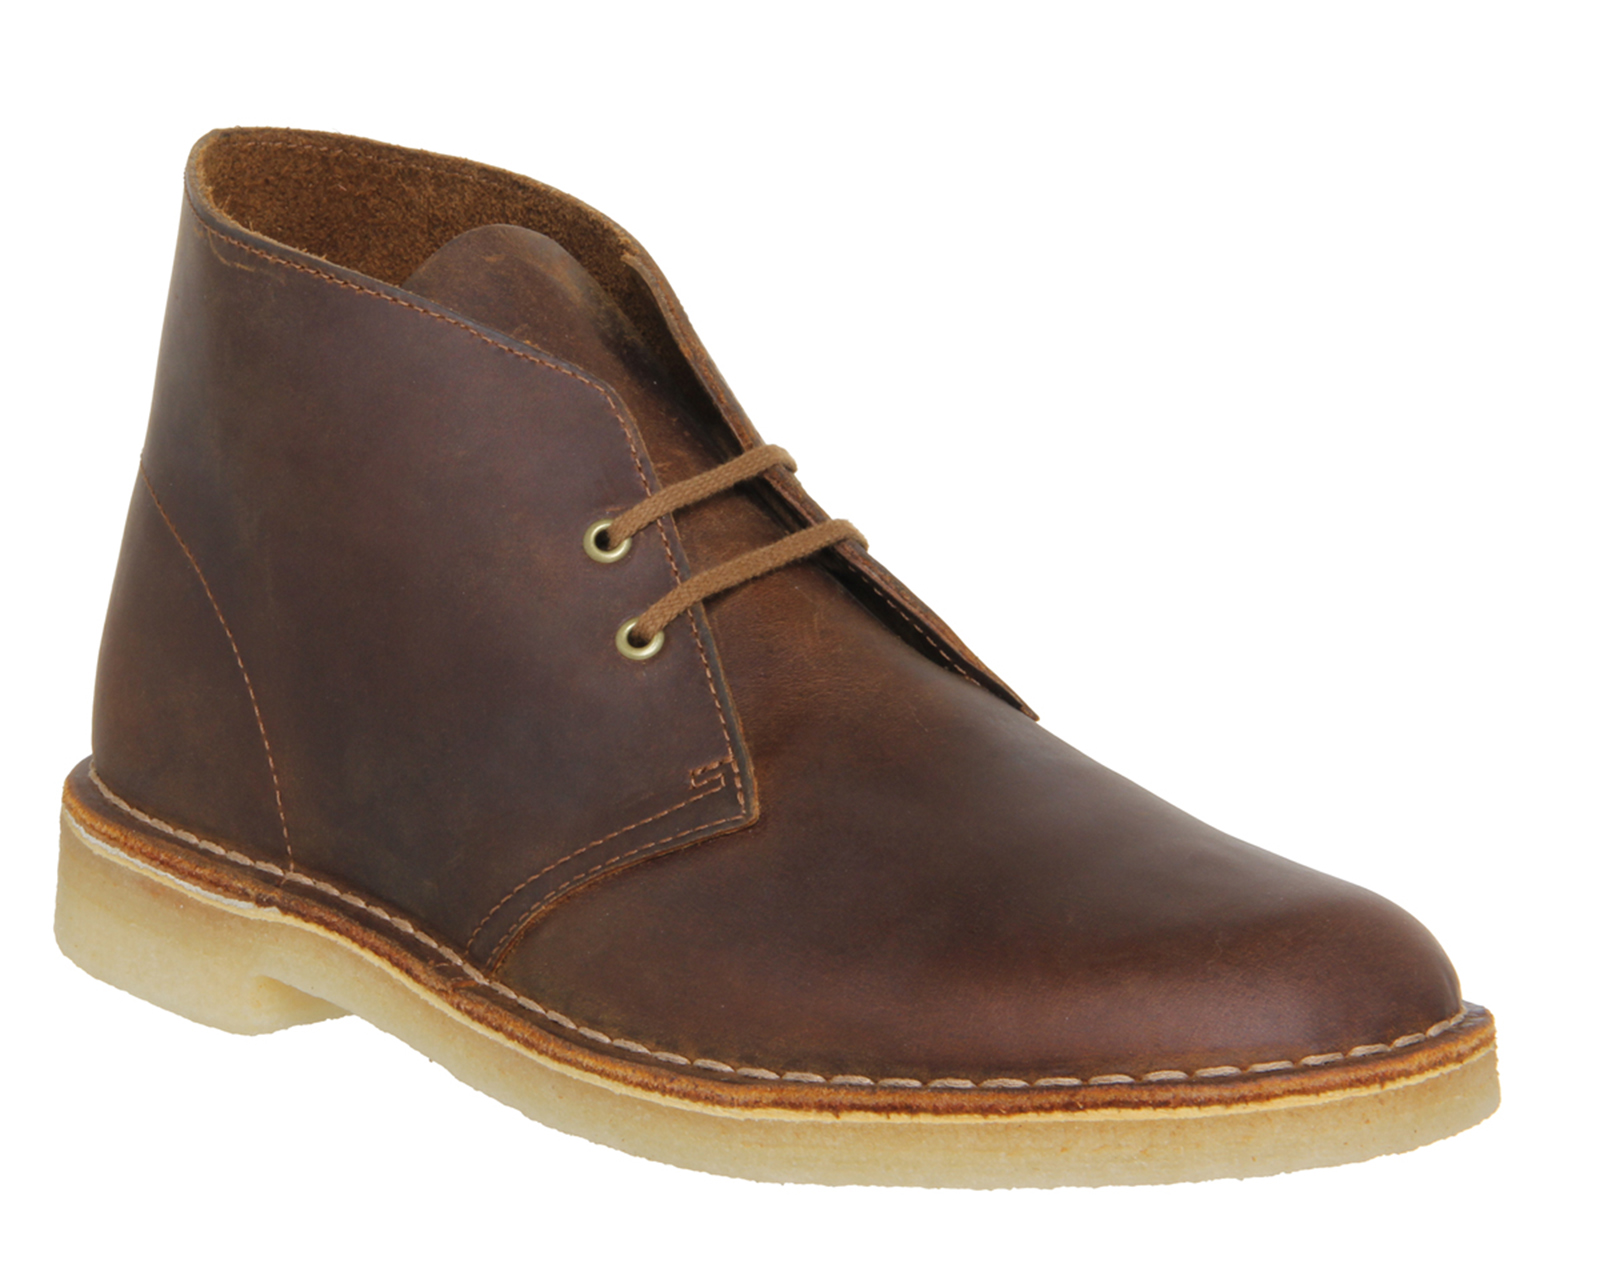 Clarks Originals Desert Boots Beeswax Leather - Boots